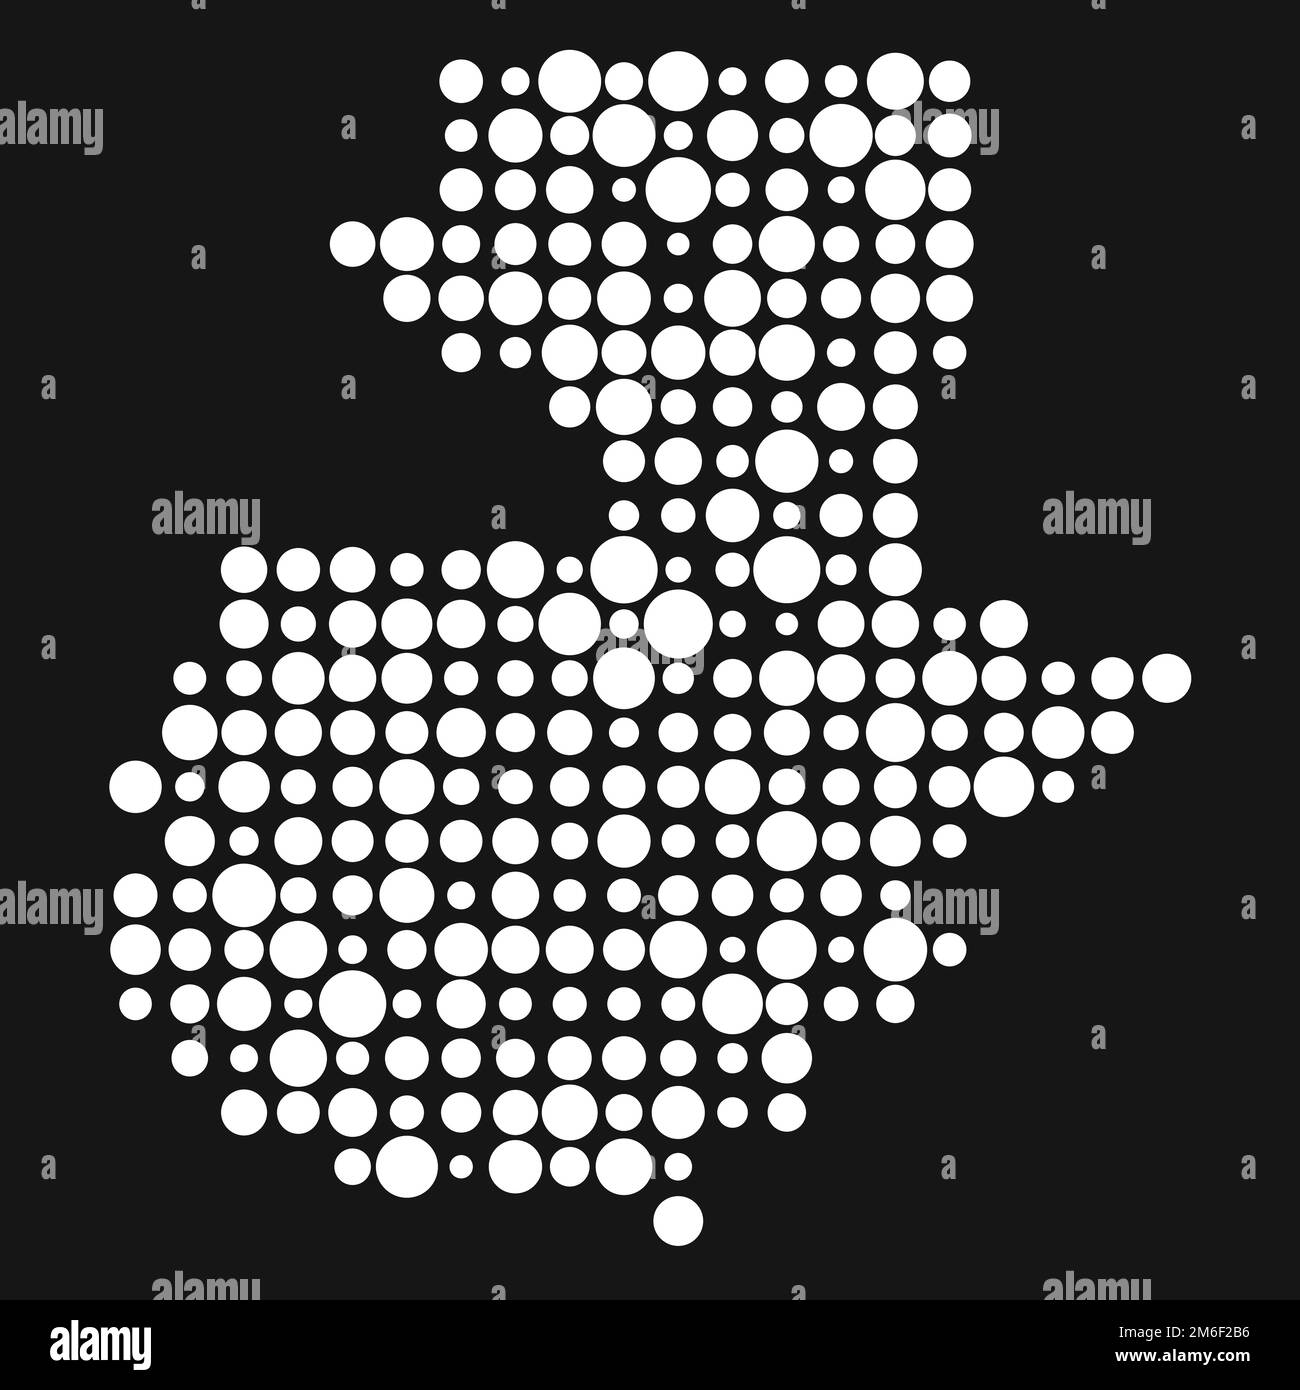 Guatemala Map Silhouette Pixelated generative pattern illustration Stock Vector